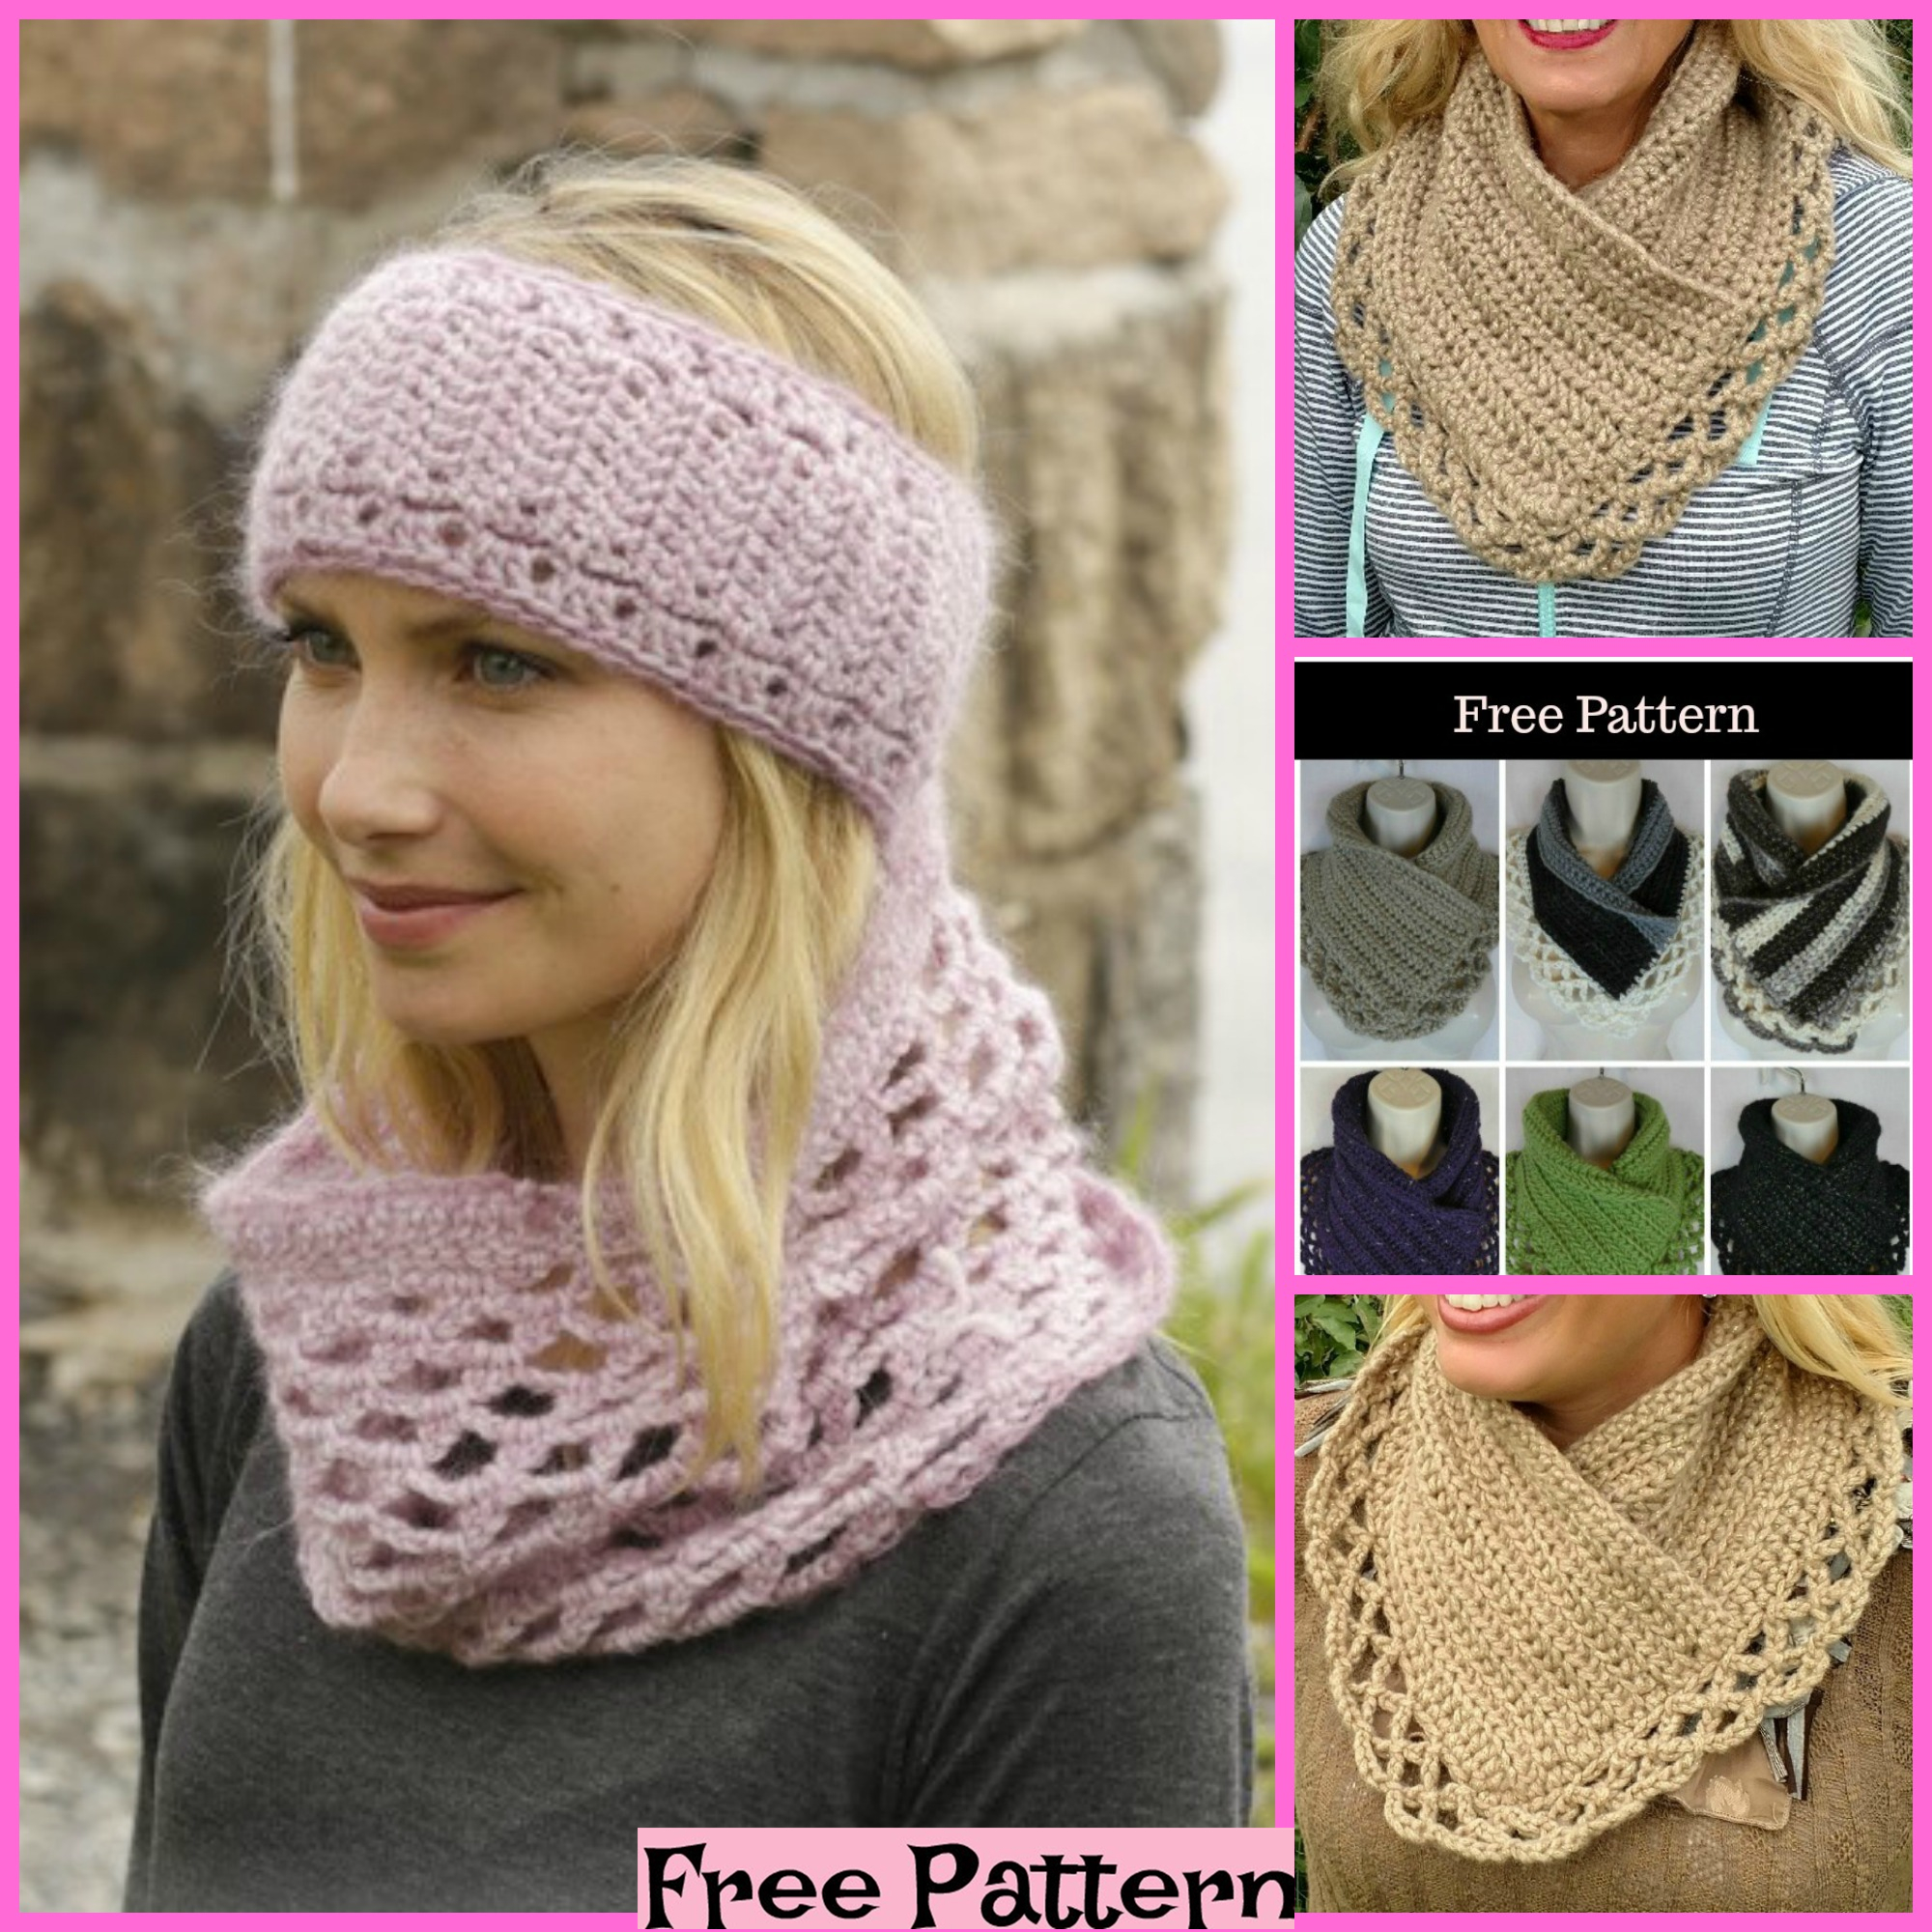 diy4ever-Crochet Lacy Neck Warmer - Free Pattern